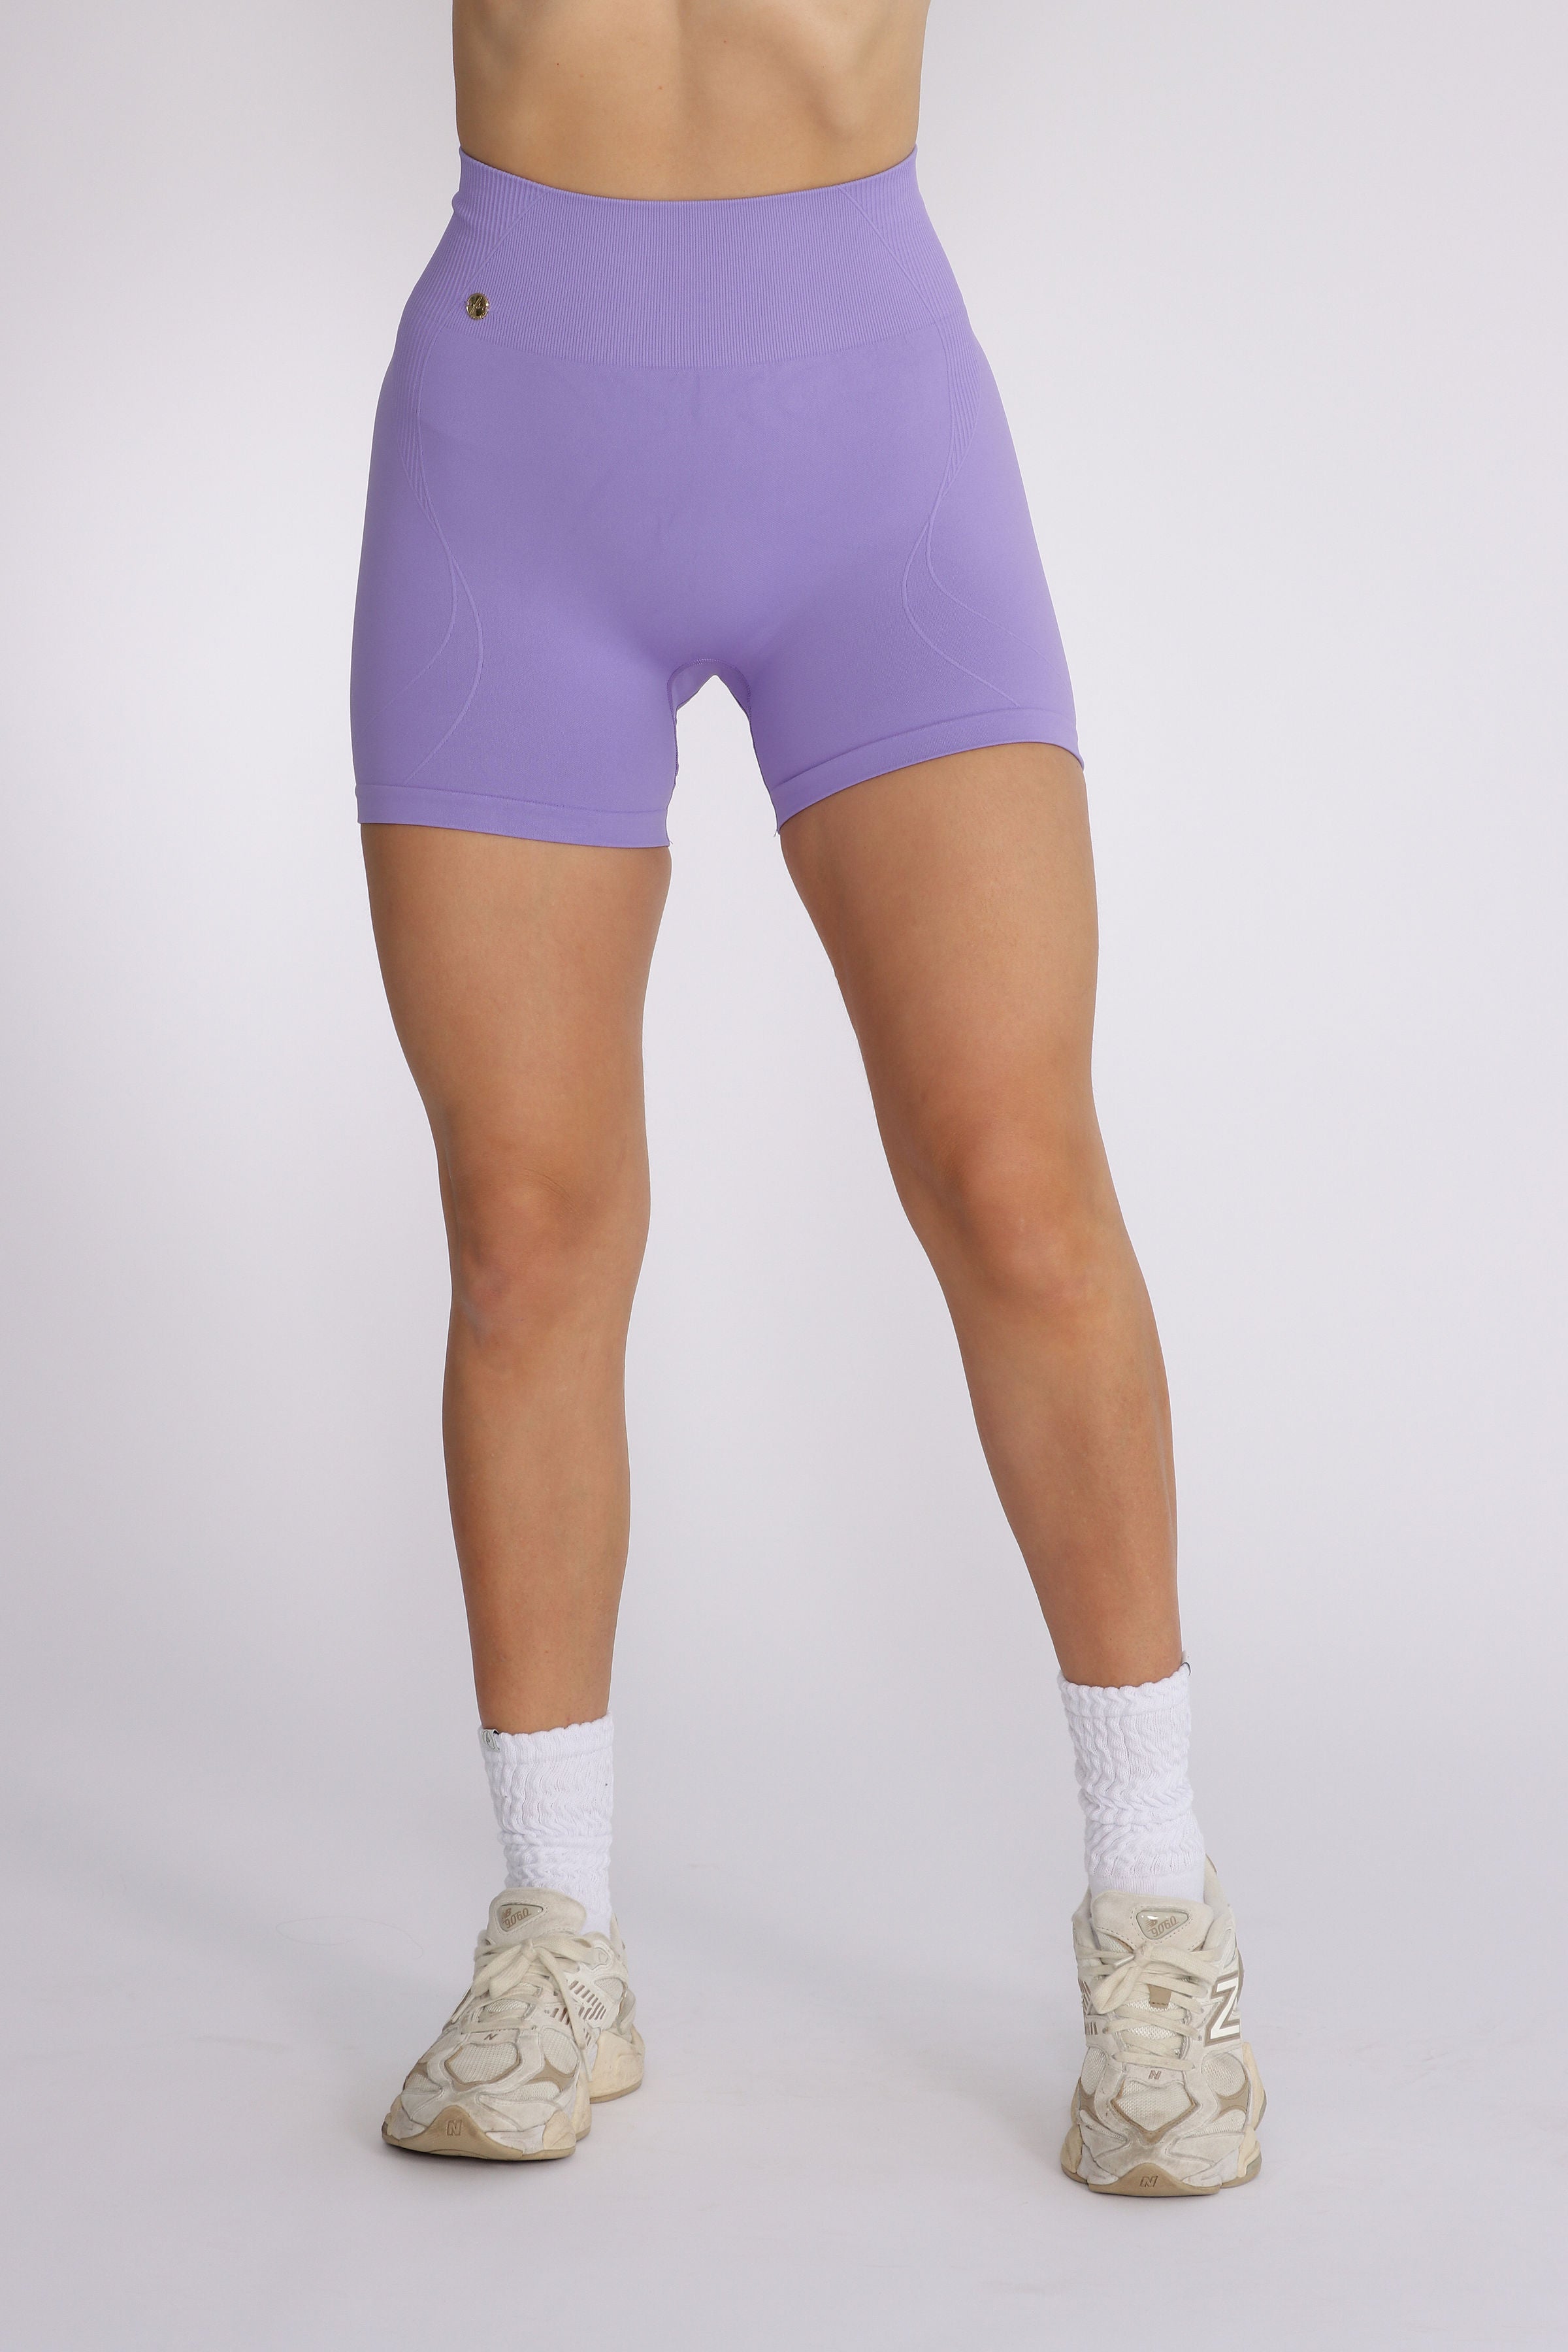 Evolve Contour Shorts - Bright Lilac